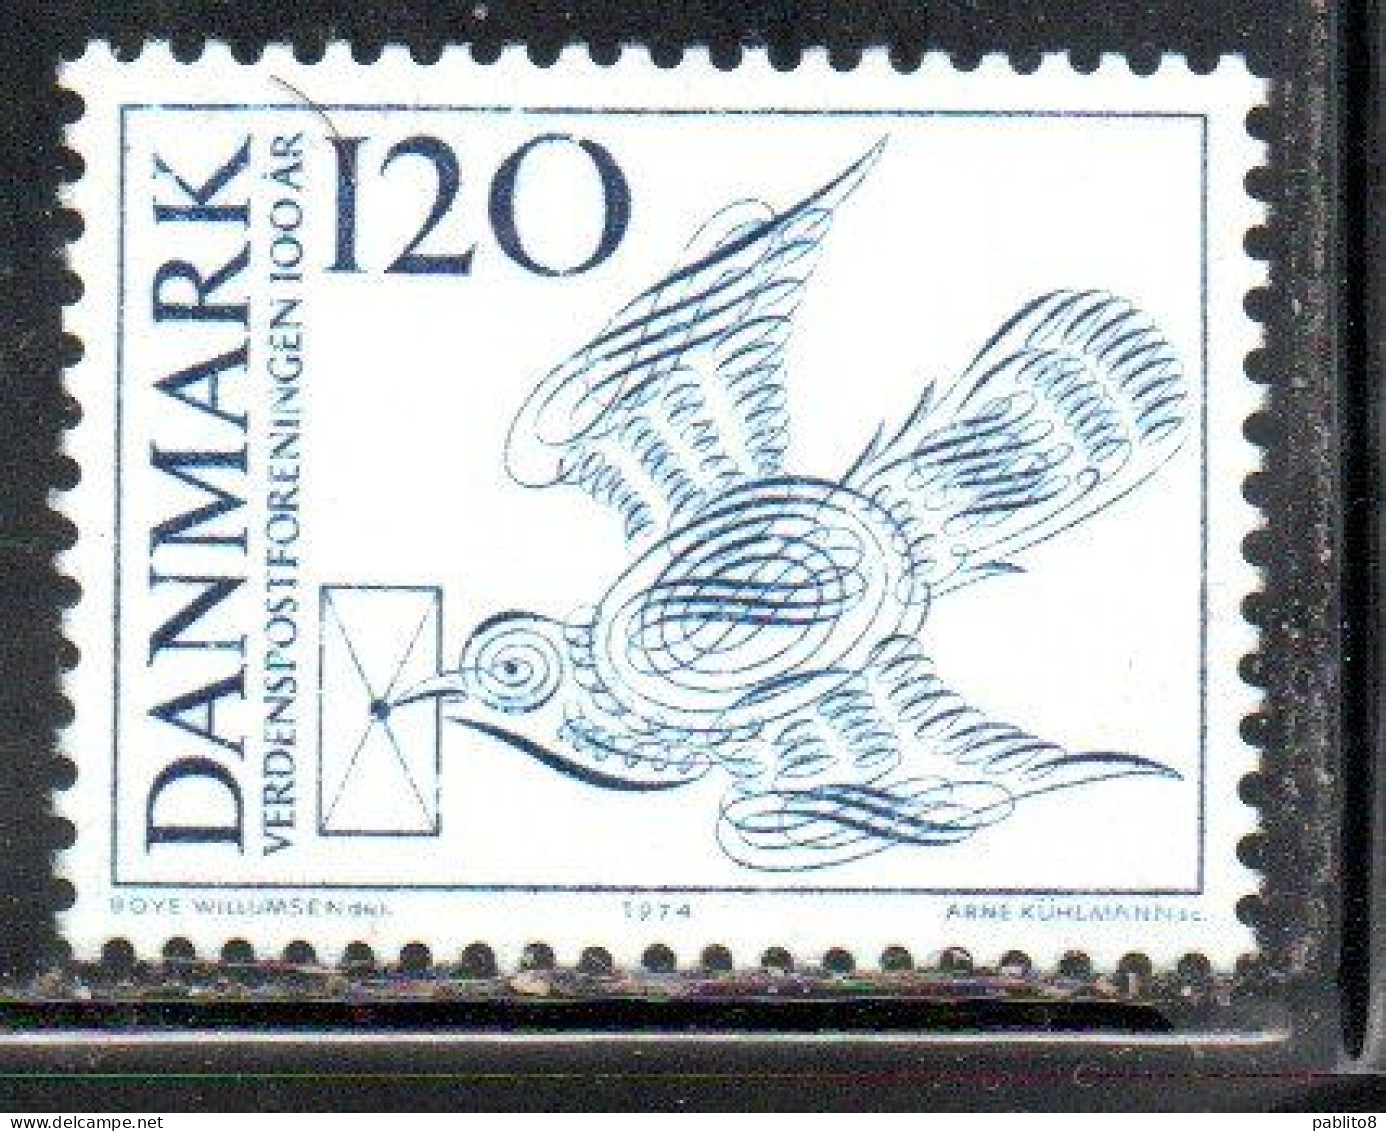 DANEMARK DANMARK DENMARK DANIMARCA 1974 CENTENARY OF UPU CARRIER PIGEON 120o MNH - Neufs